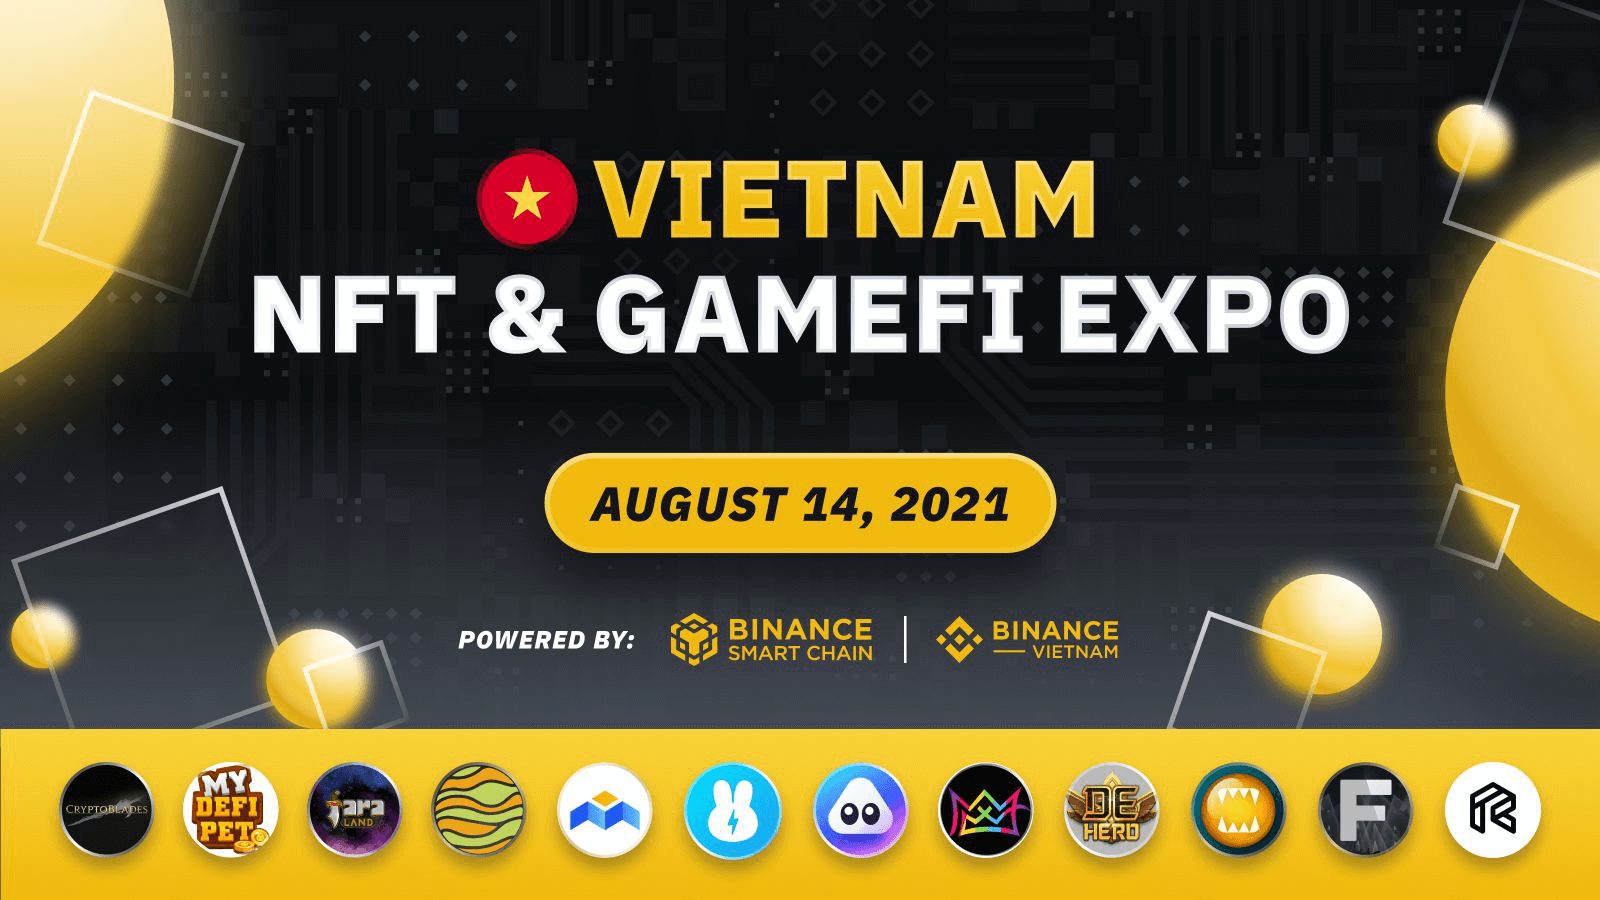 Vietnam NFT & GameFi Expo by Binance Smart Chain